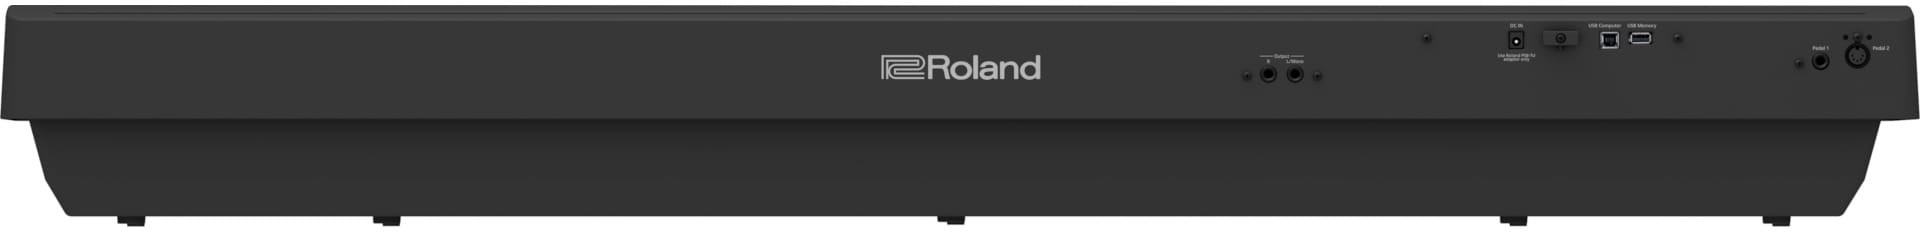 Roland FP-30X